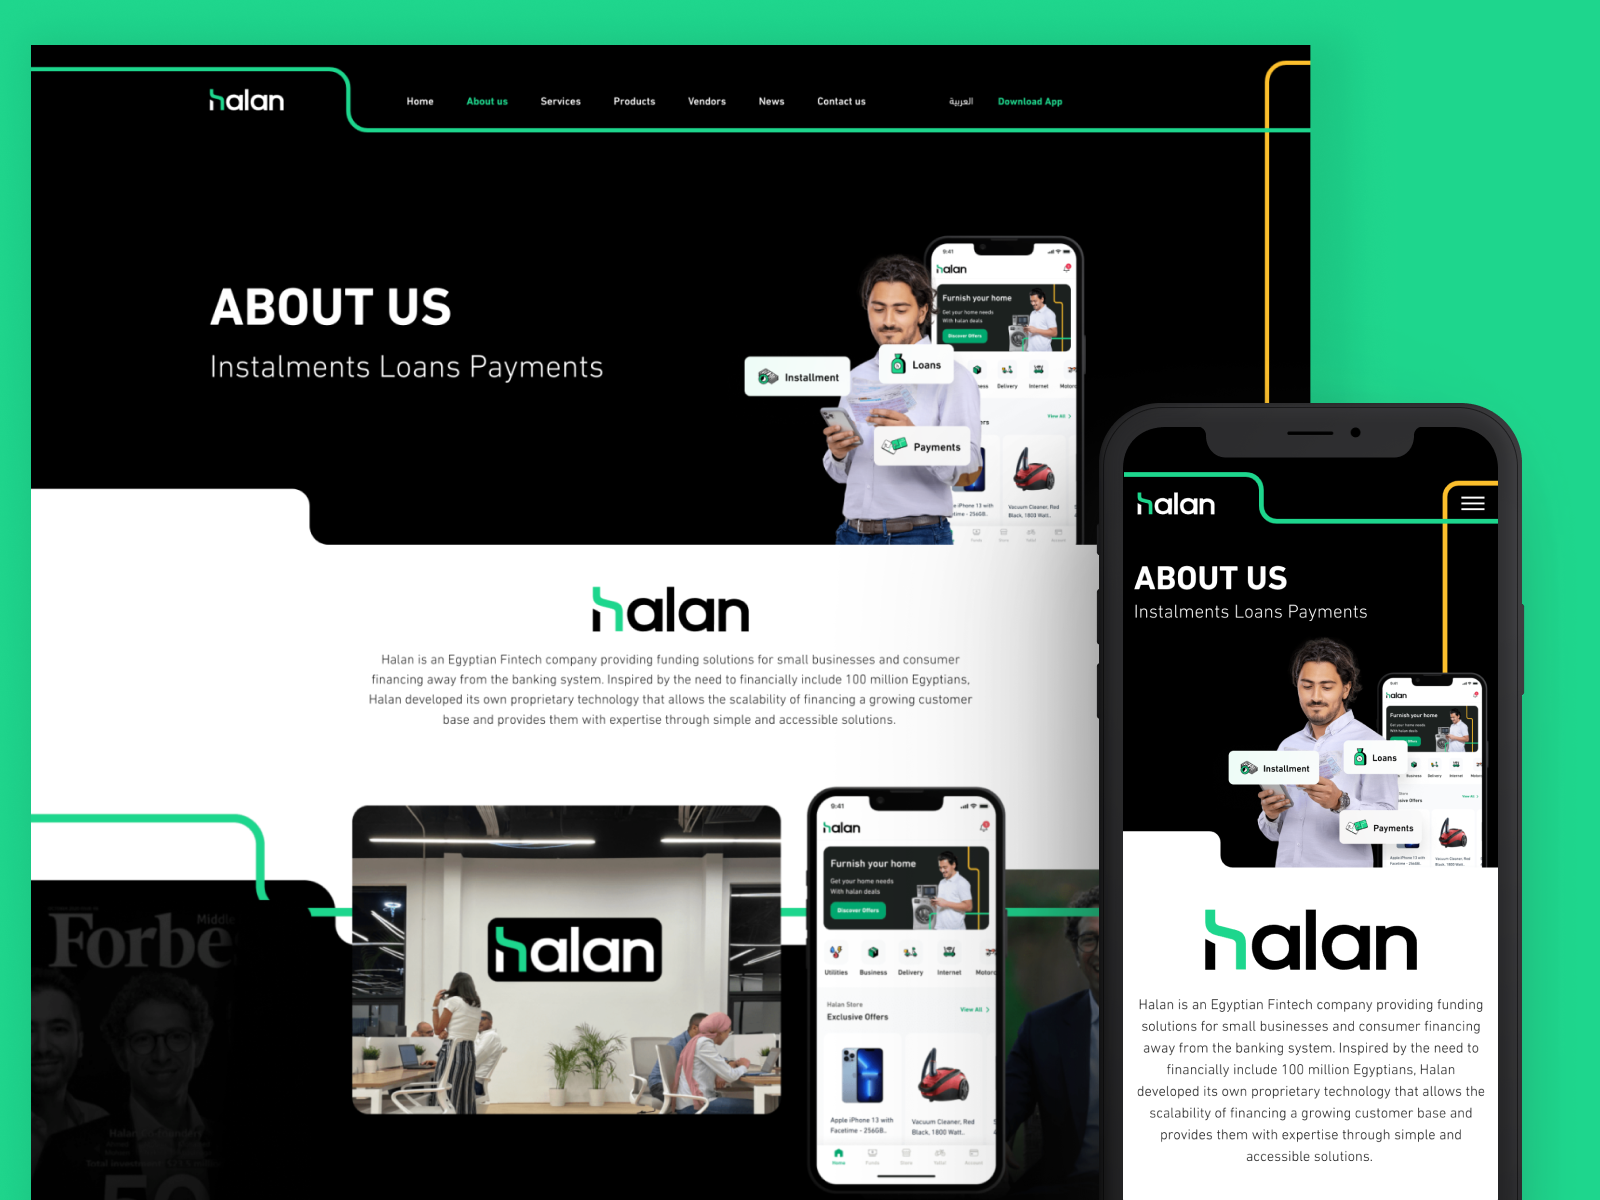 Halan | About us